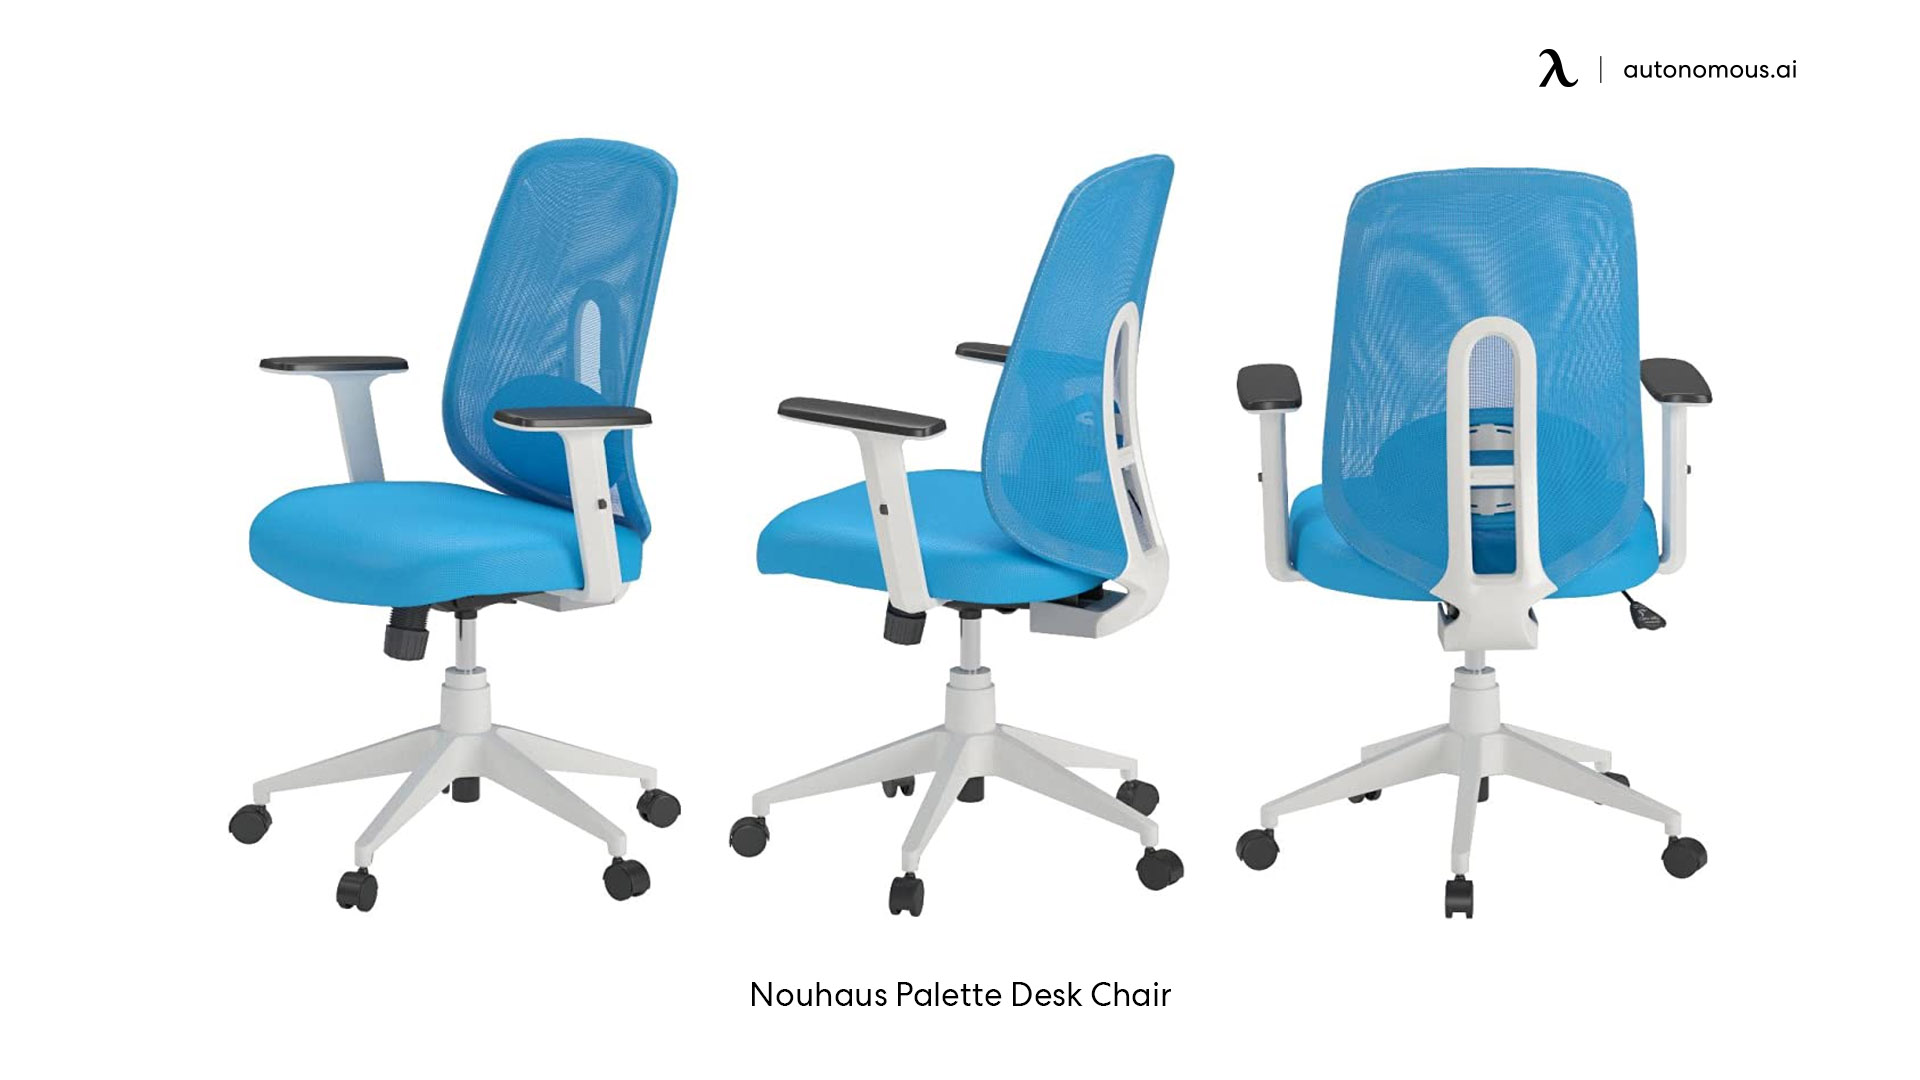 Nouhaus Palette ergonomic stylish desk chair